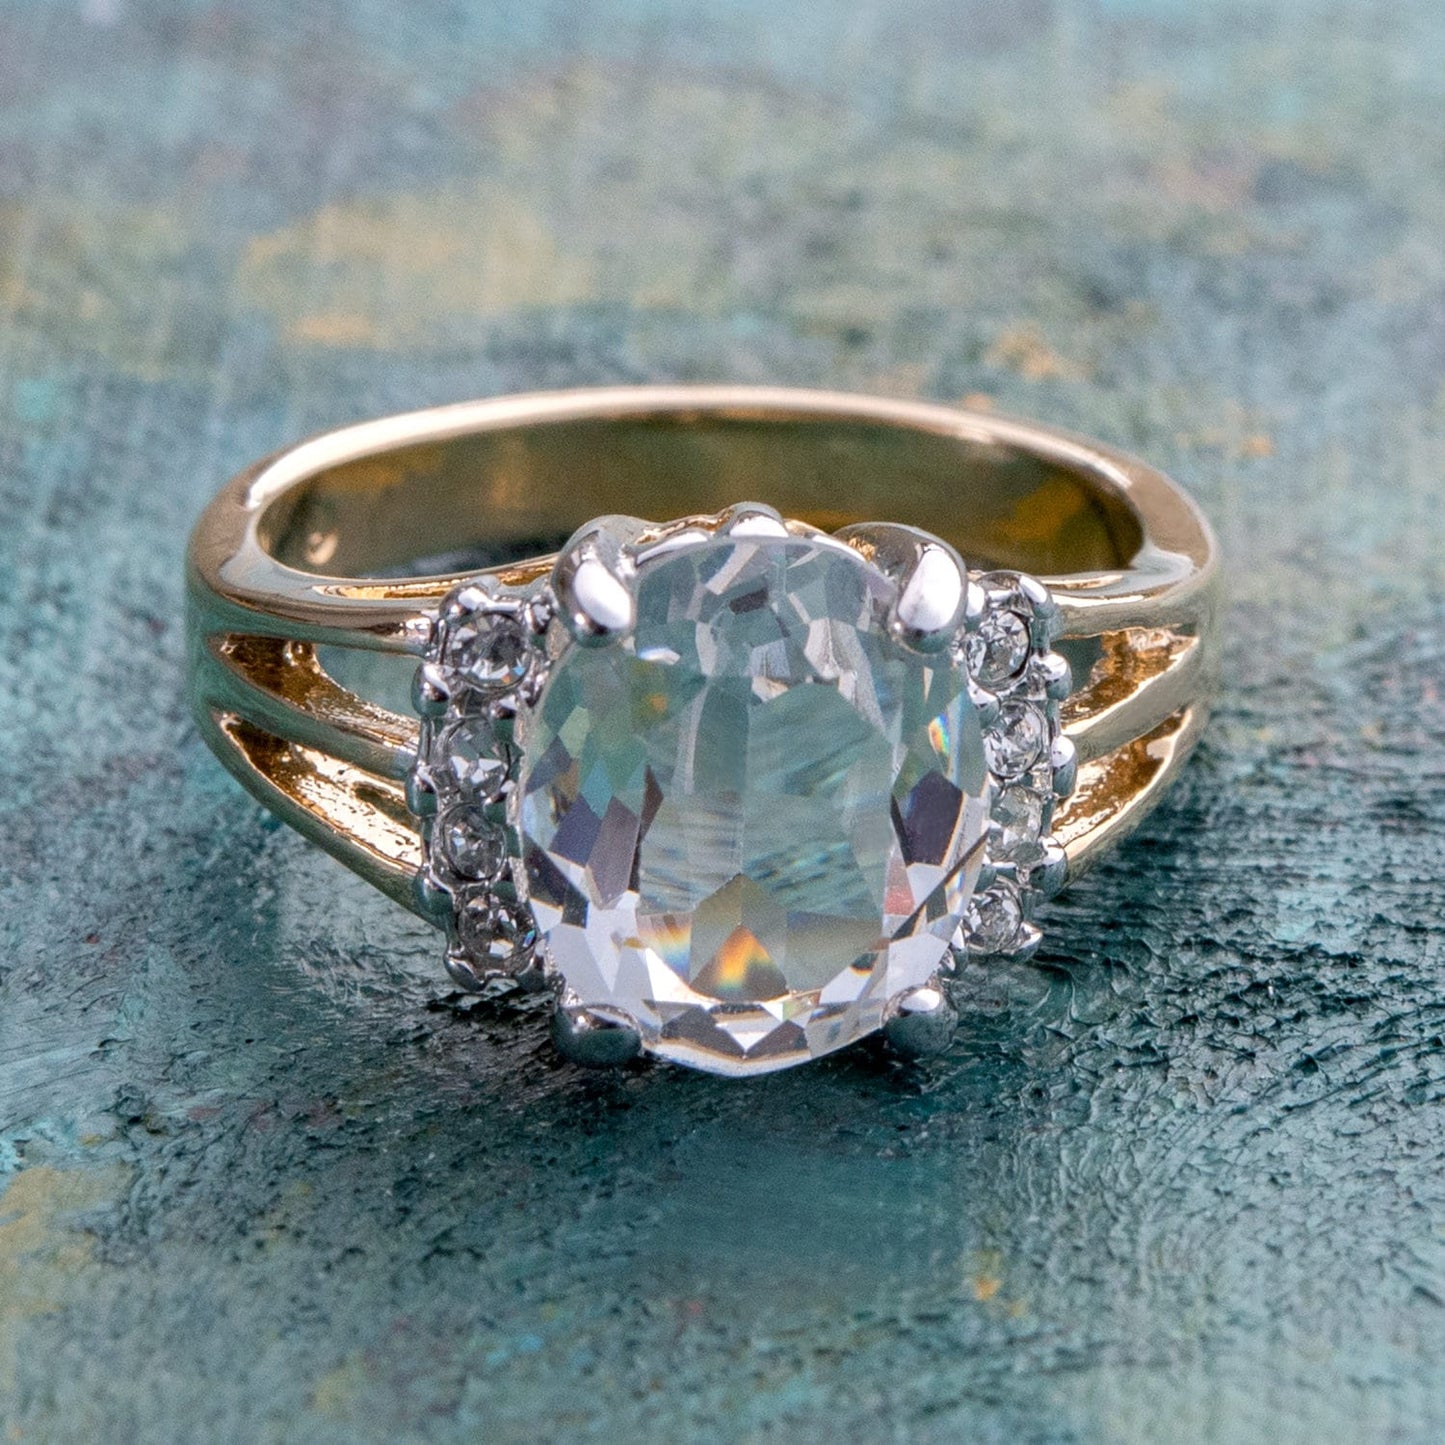 Vintage Ring 1980's Clear Swarovski Crystal Ring 18k Gold  R1664 - Limited Stock - Never Worn